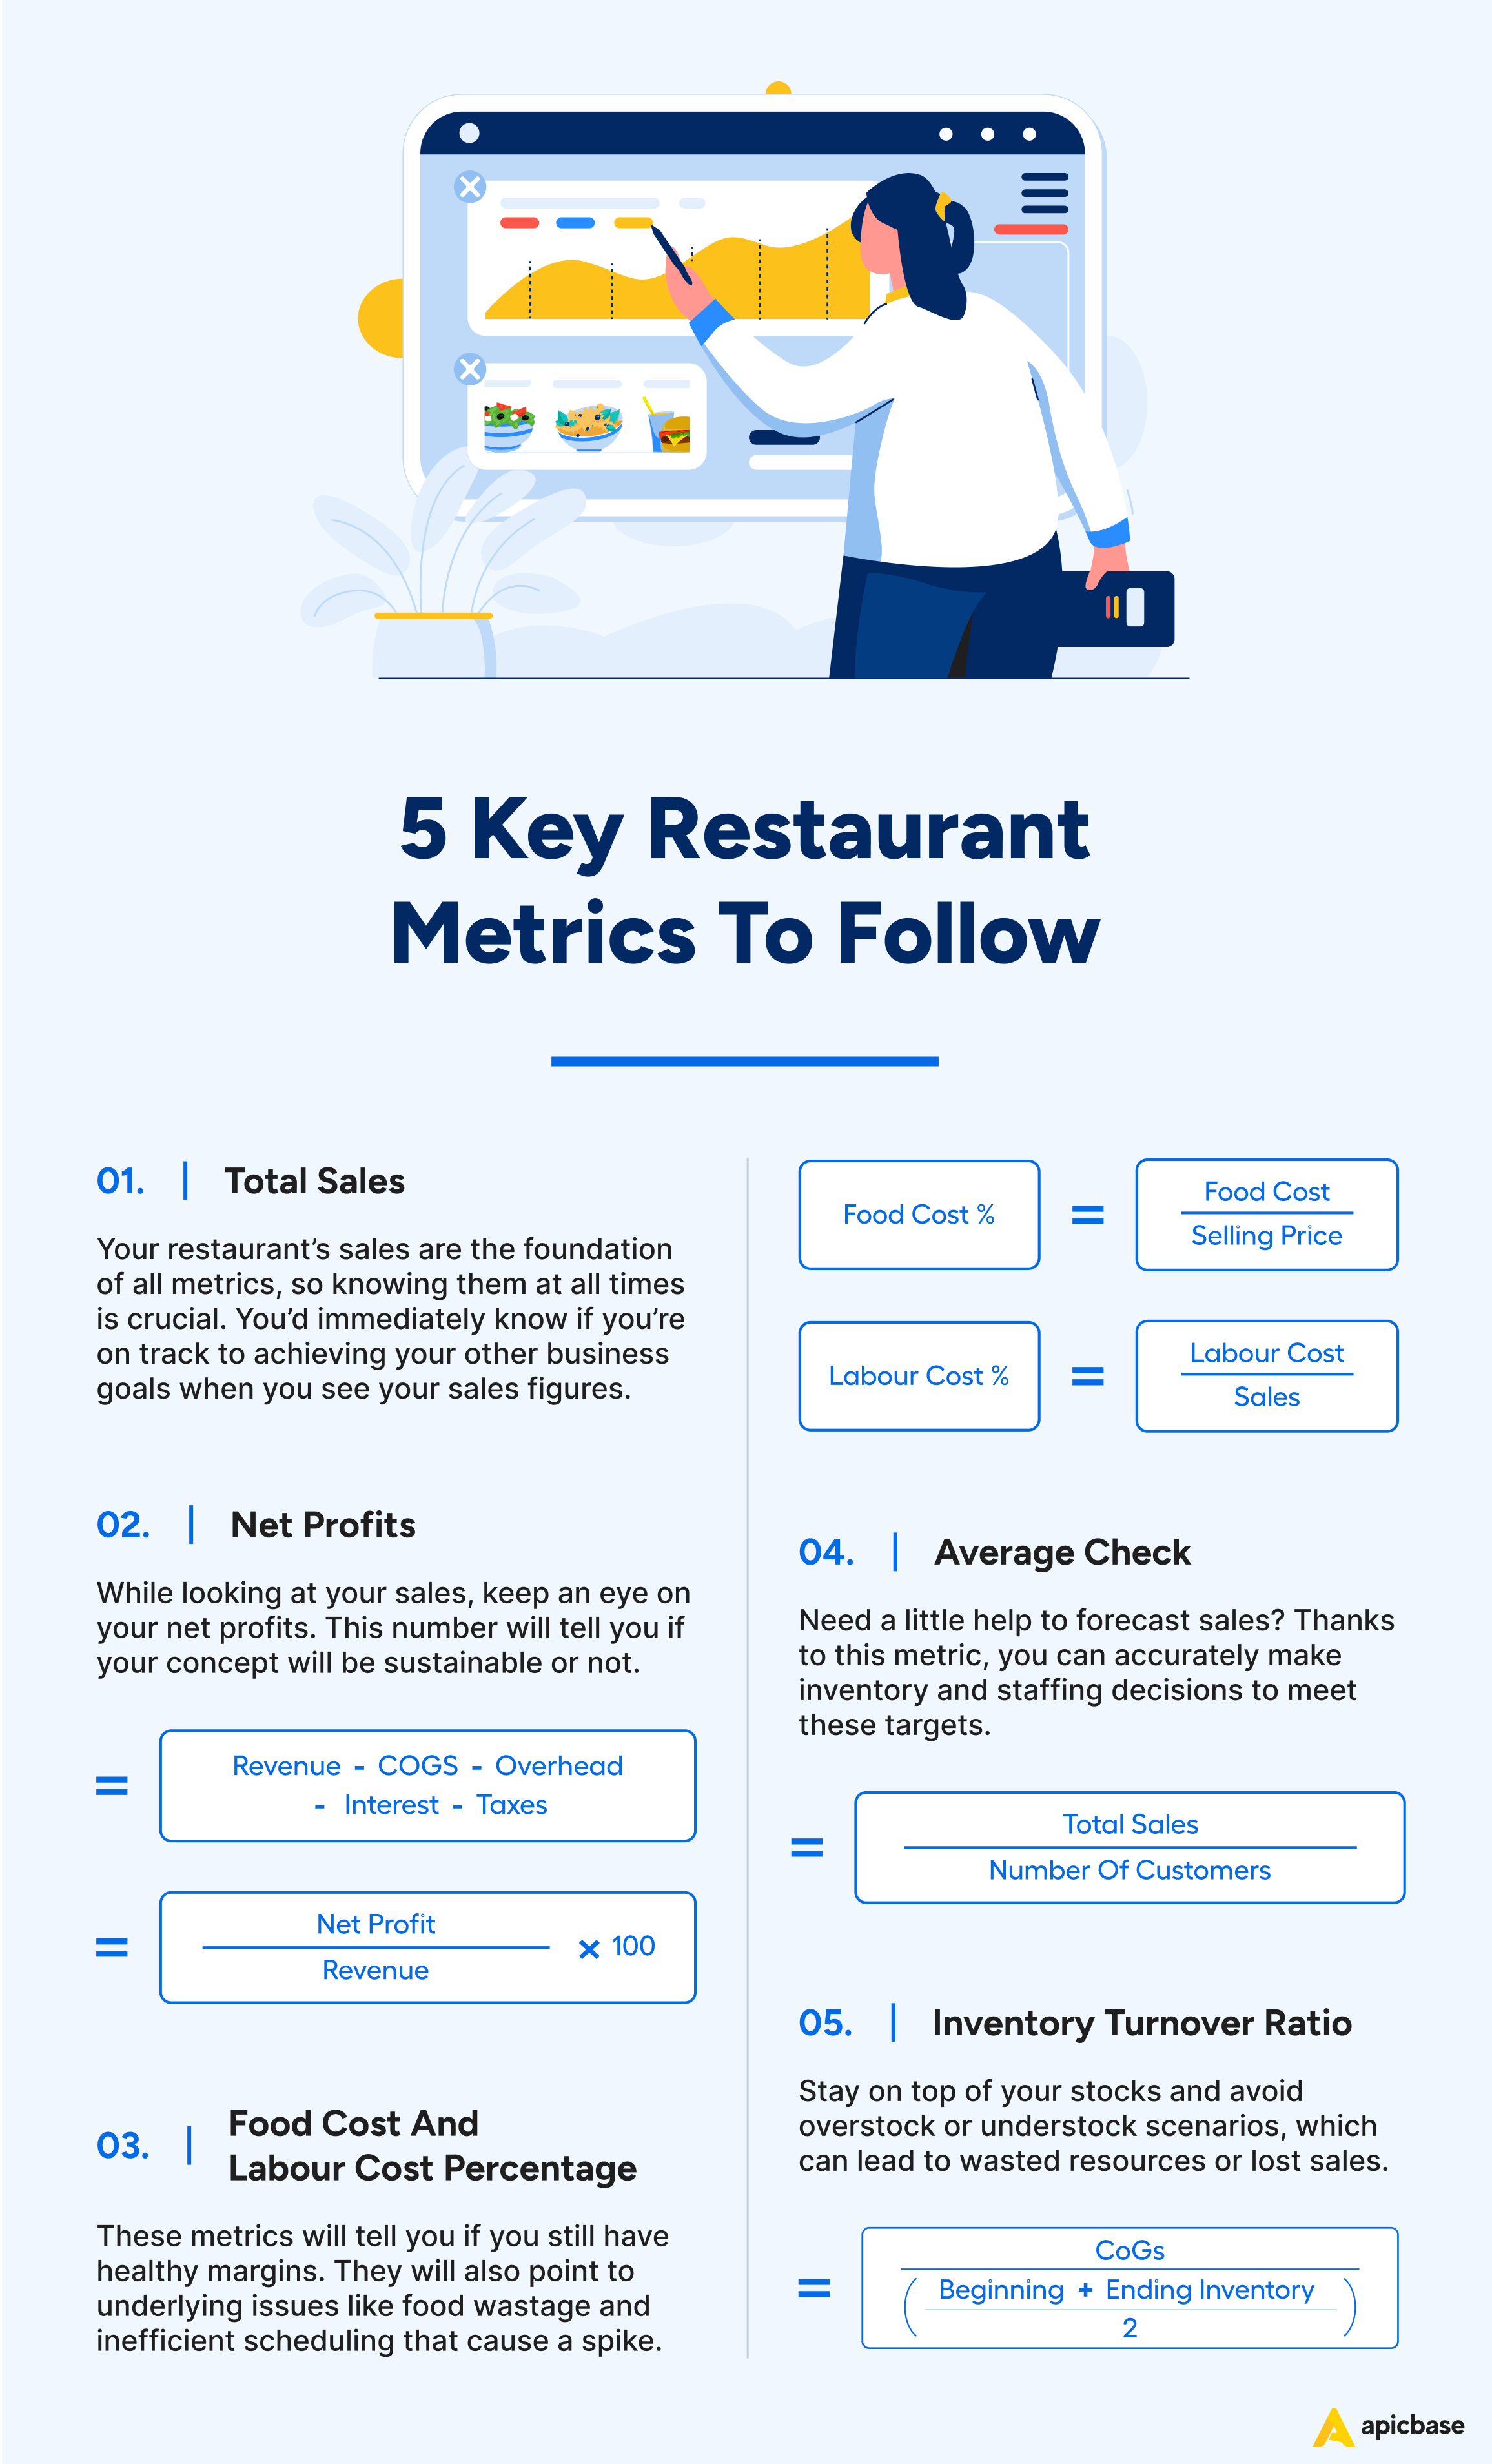 5 Key Restaurant Metrics To Follow